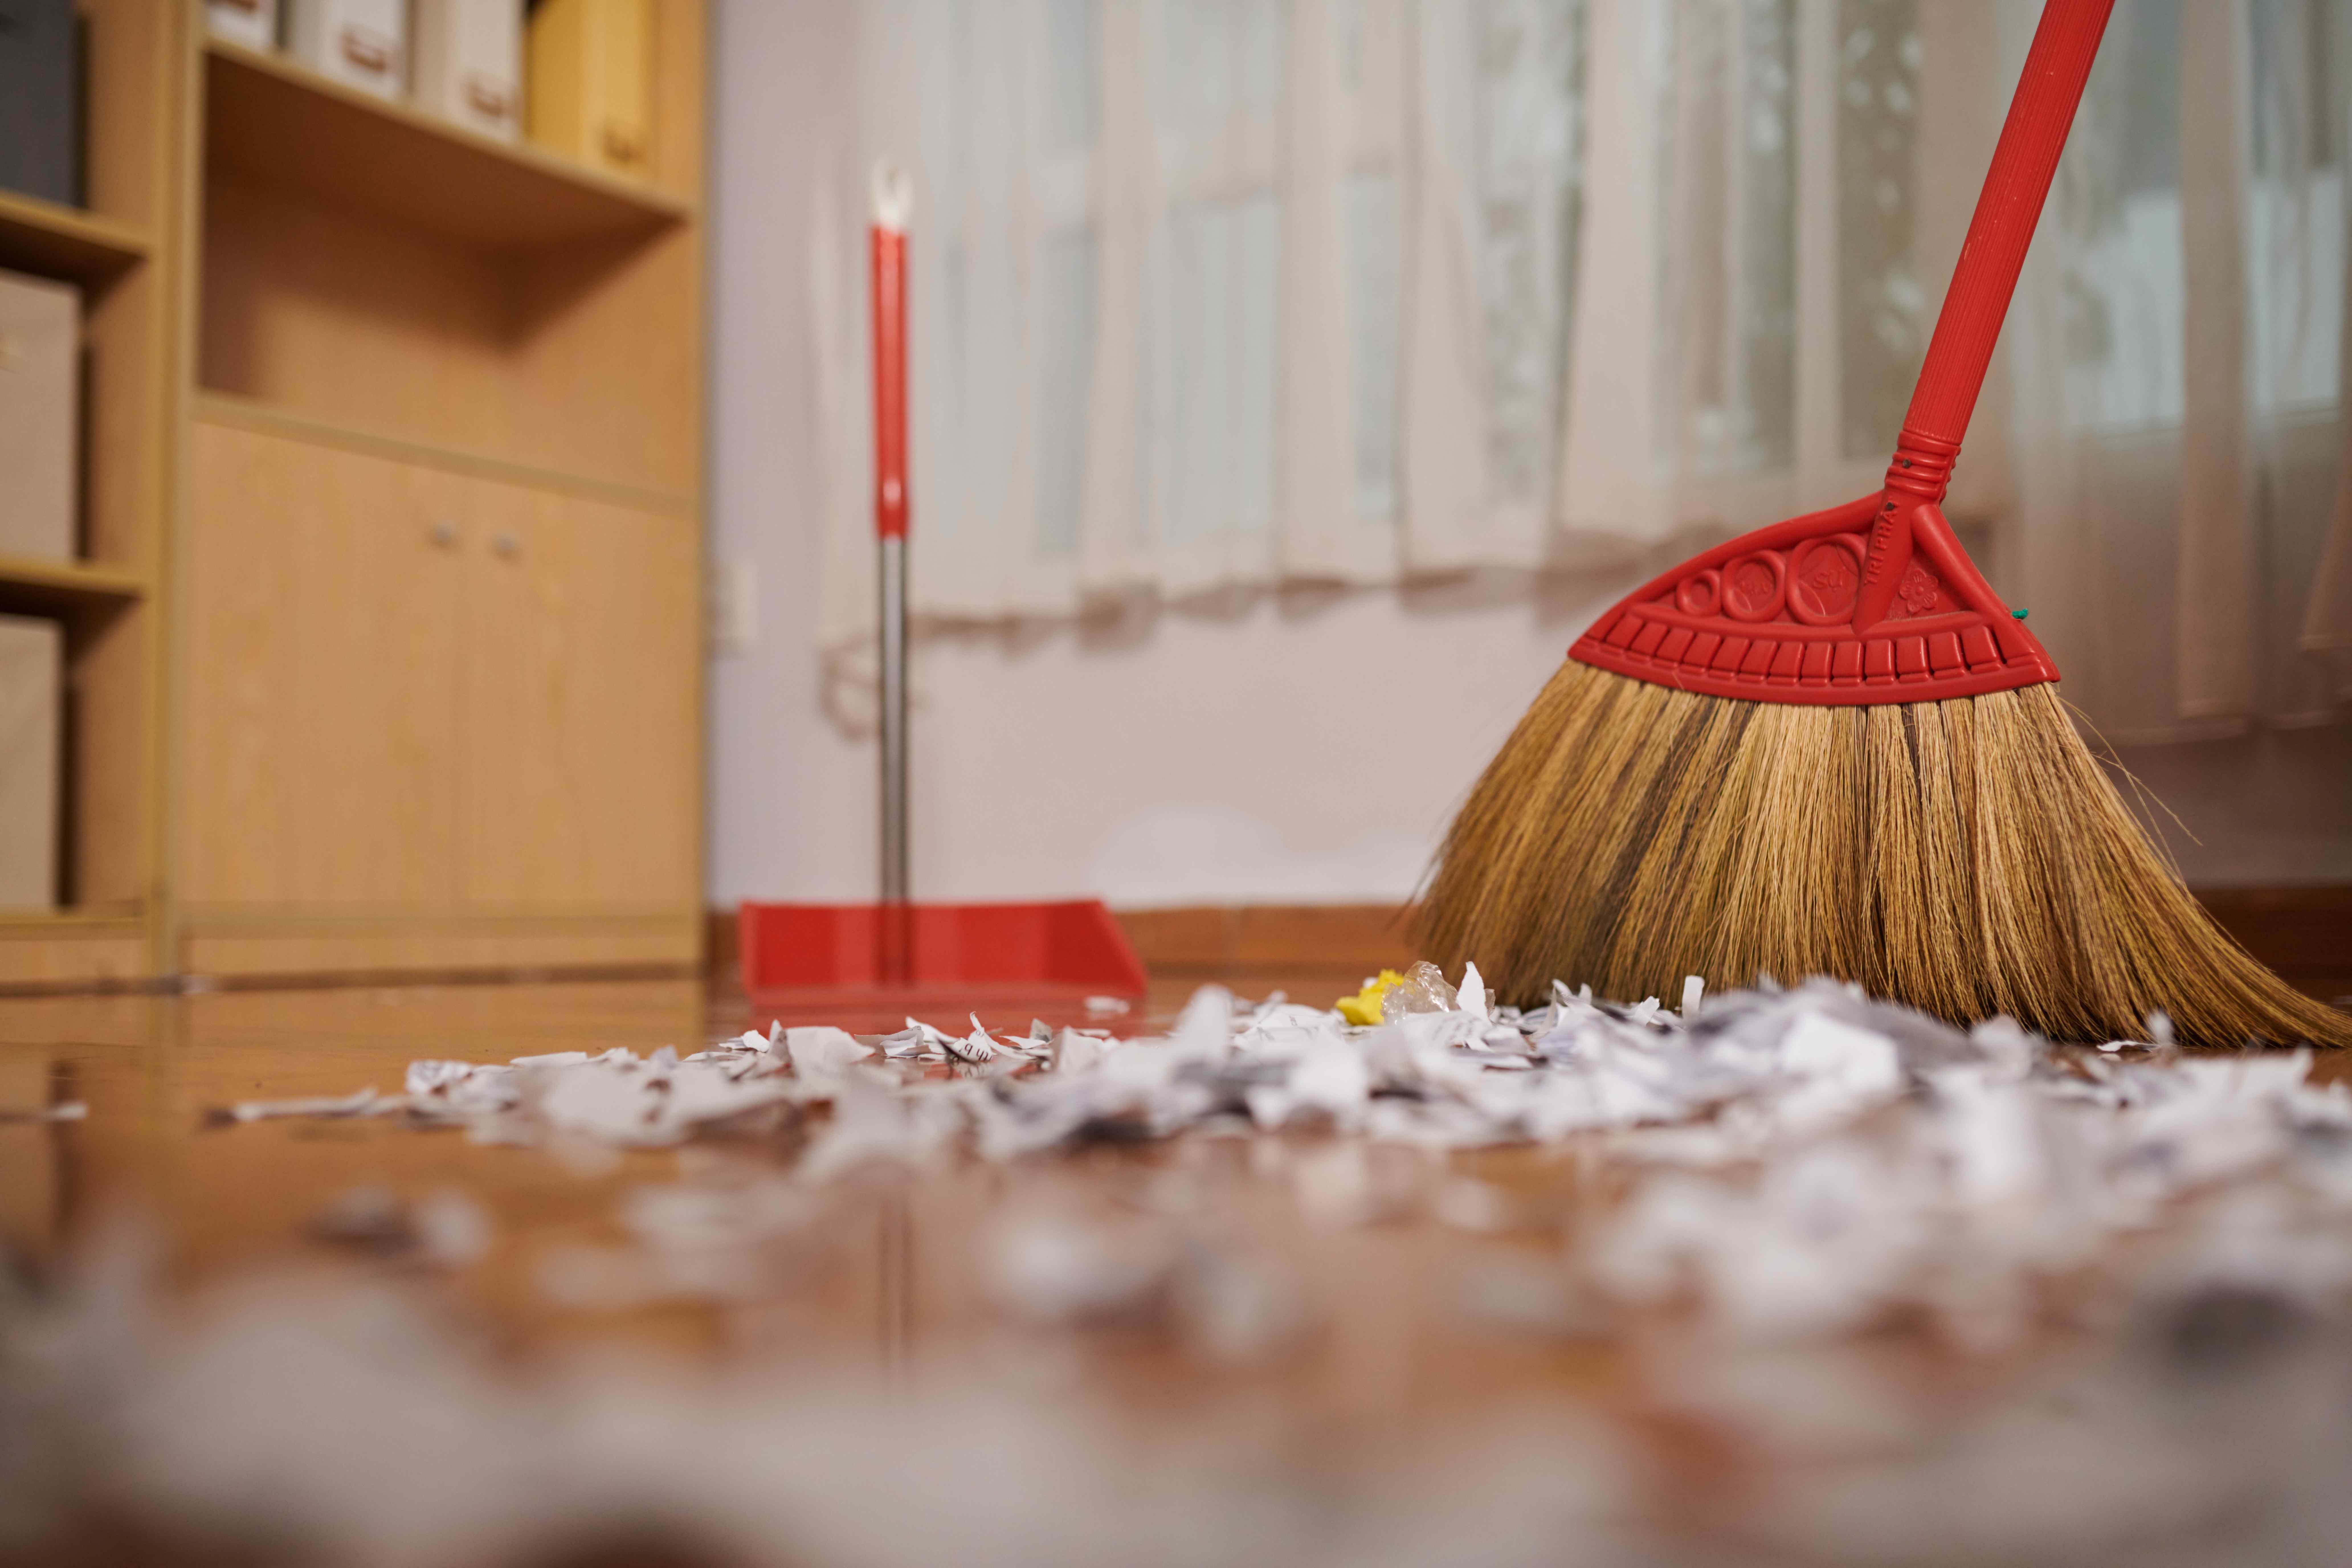 janitor sweeping floor 2022 11 26 02 05 08 utc - Decon Solutions Australia Services